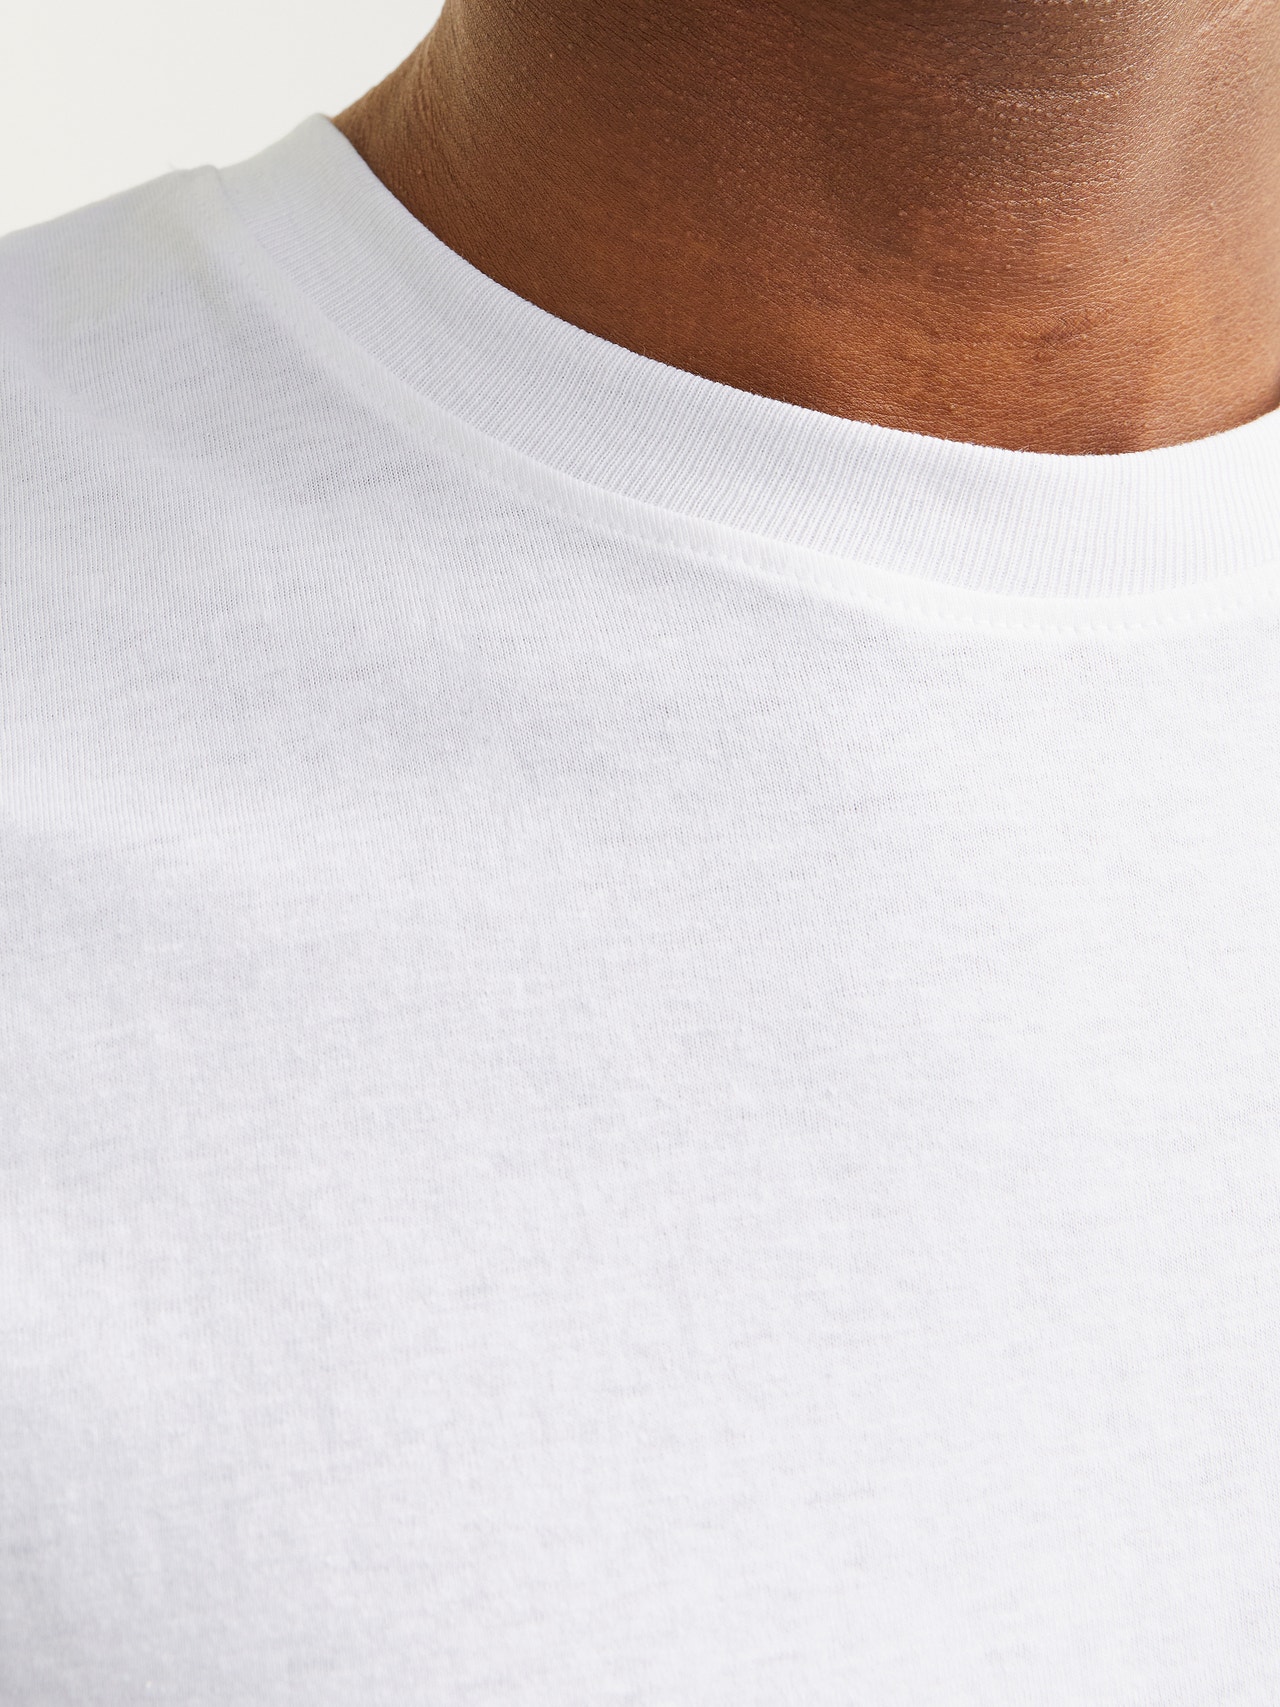 Jack & Jones Printed Crew neck T-shirt -White - 12255079